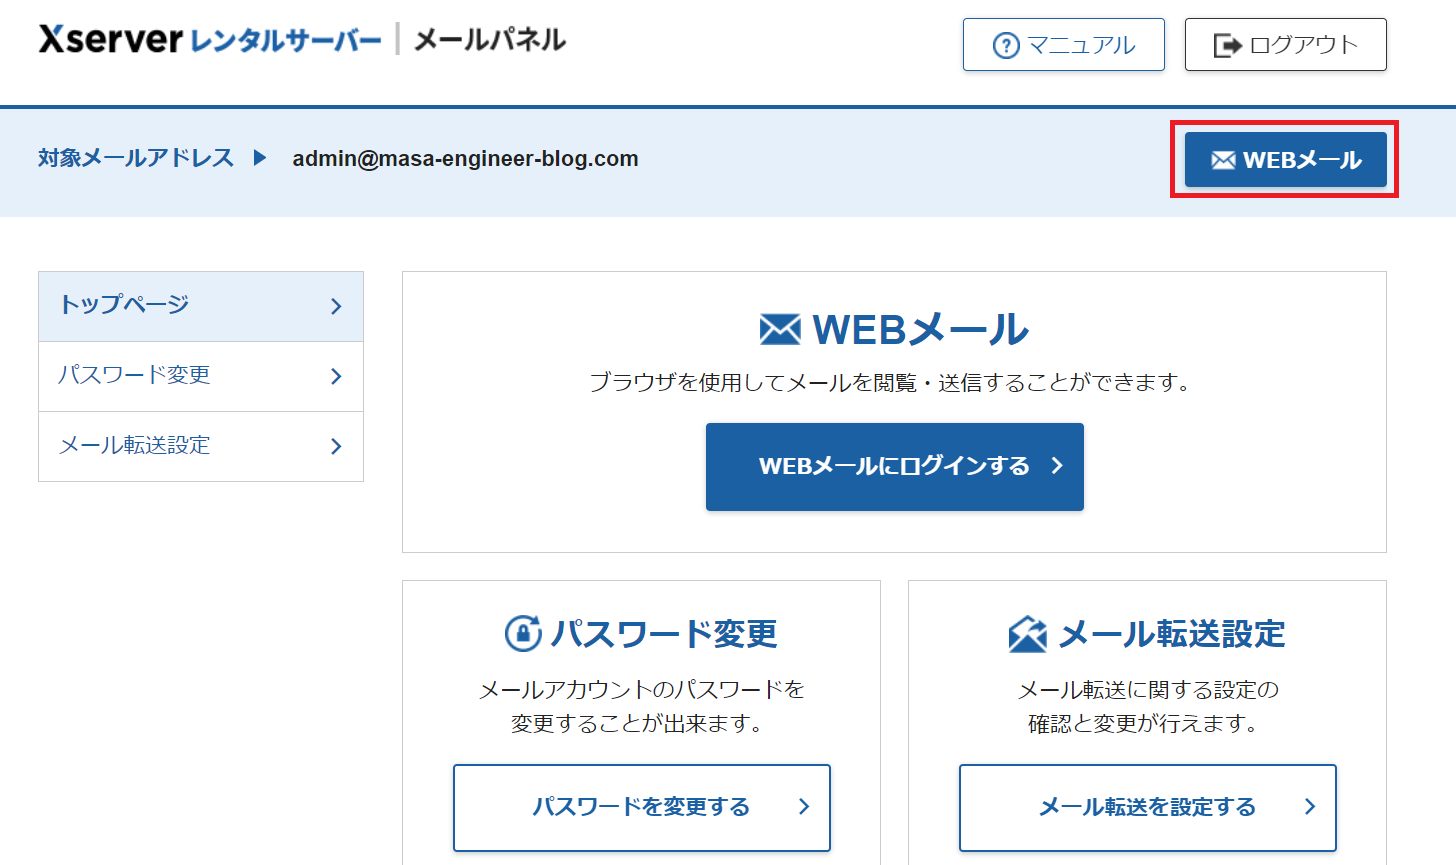 2-Xserver-webmail